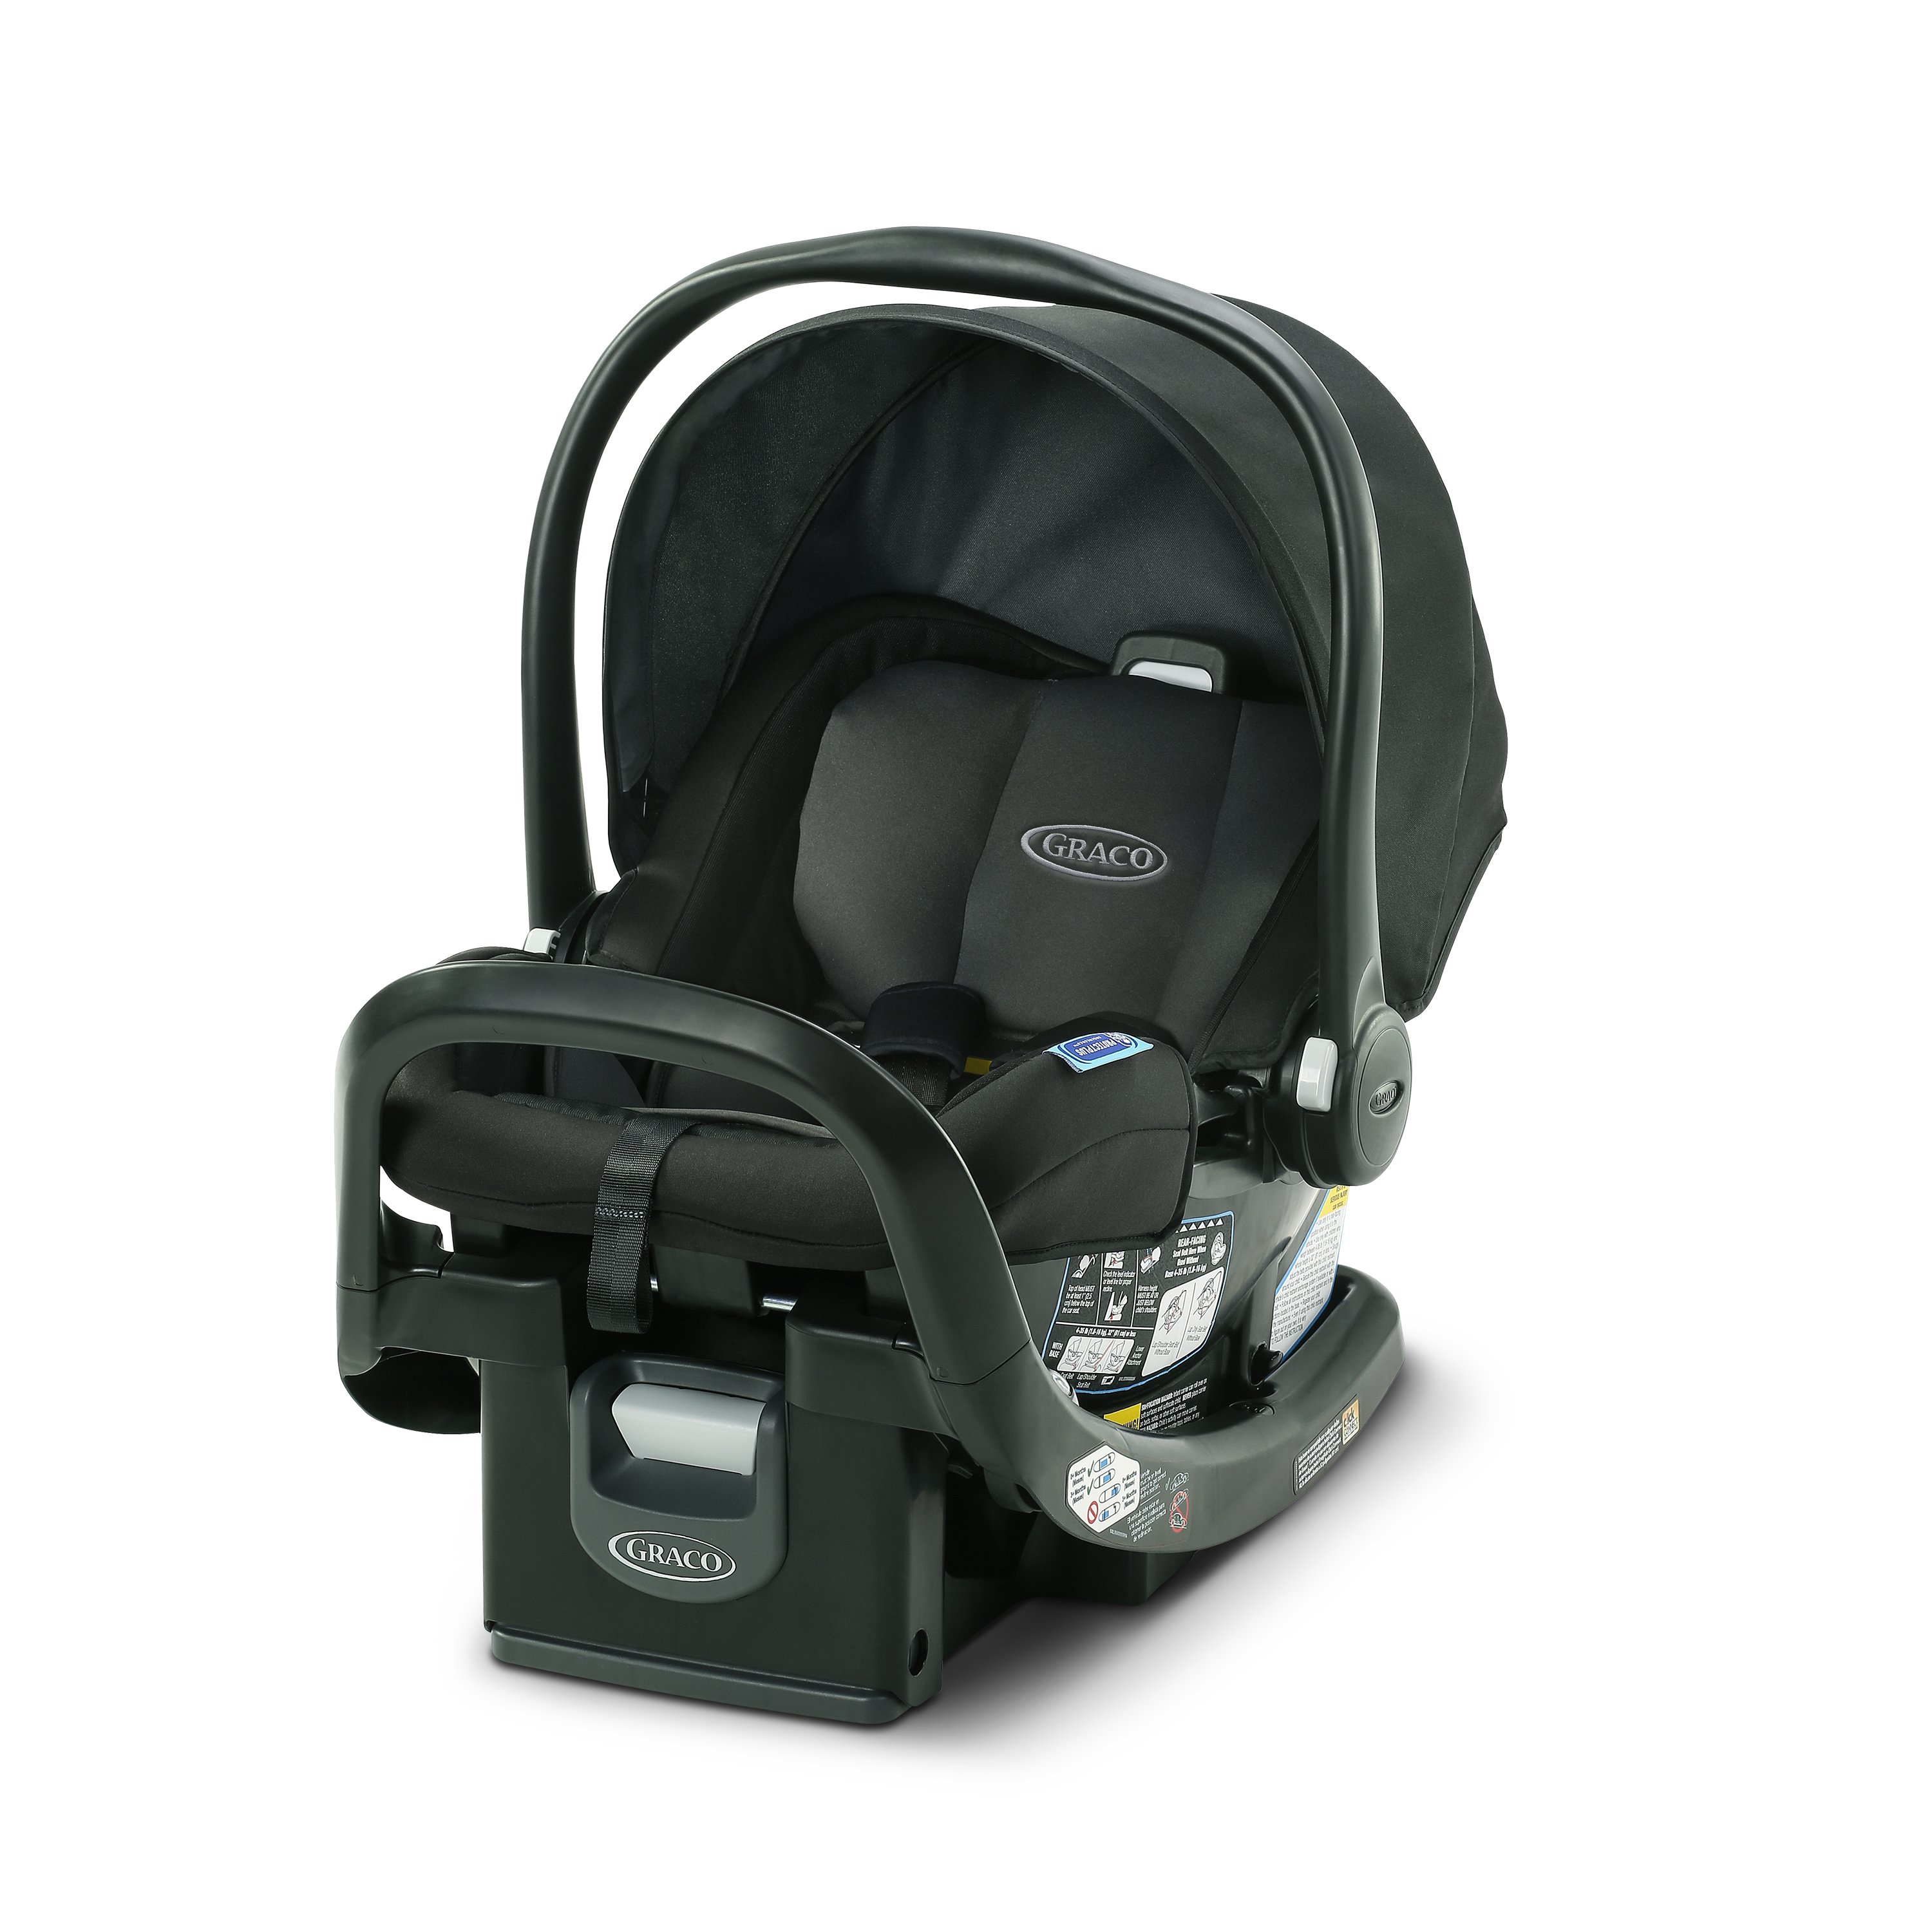 graco trueshield infant car seat manual